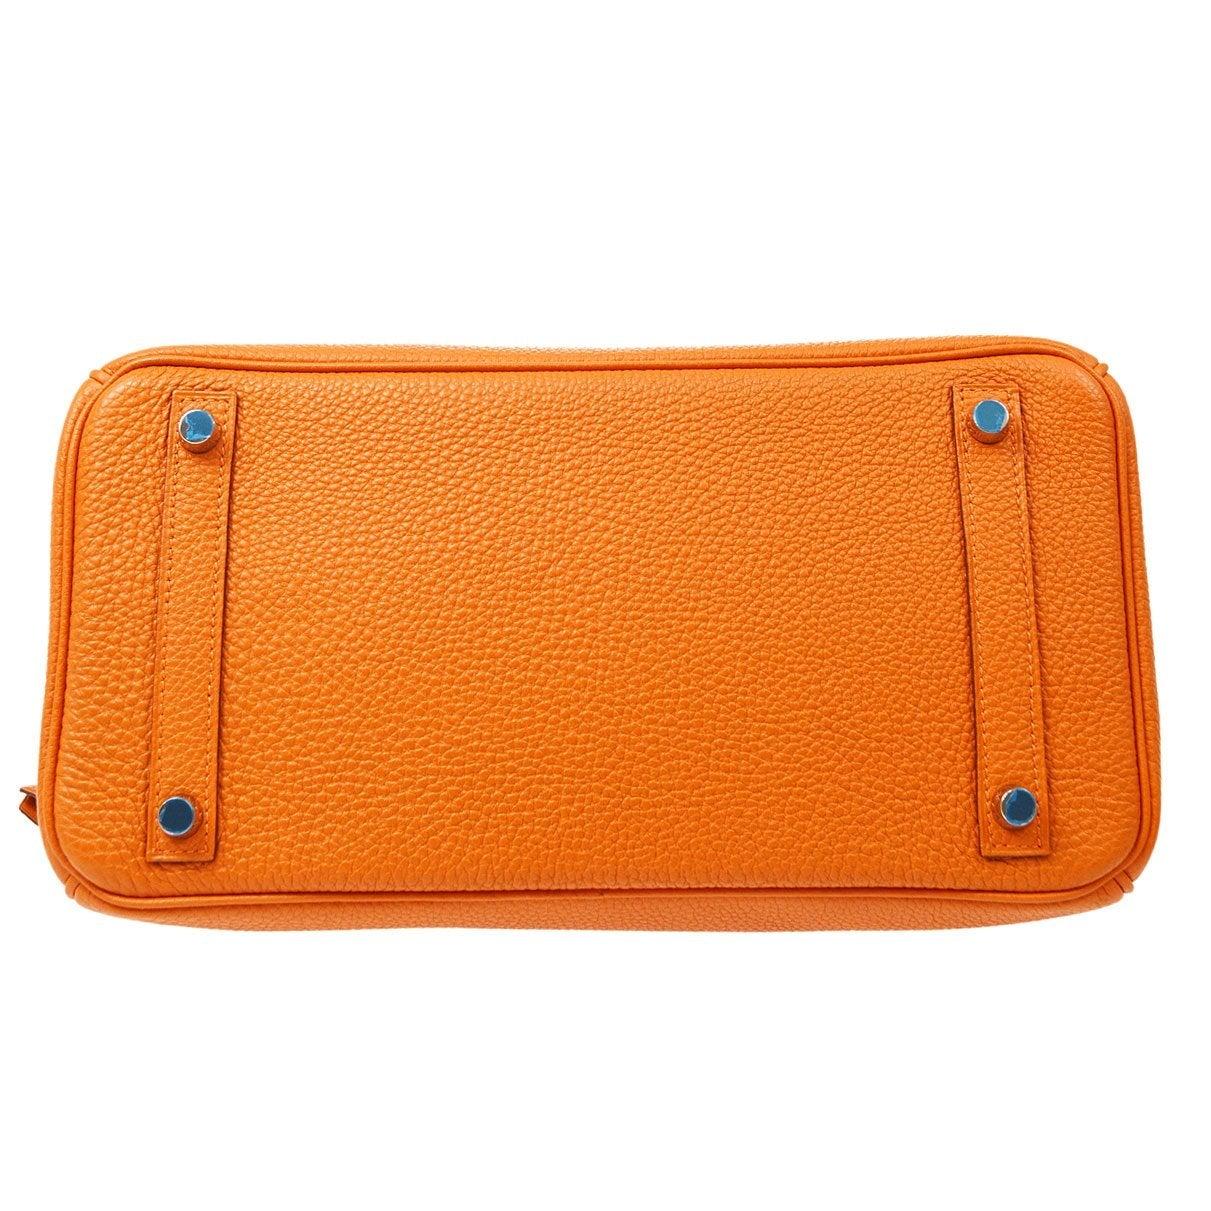 HERMES Birkin 30 Orange Togo Leather Gold Hardware Top Handle Tote Bag in Box 1